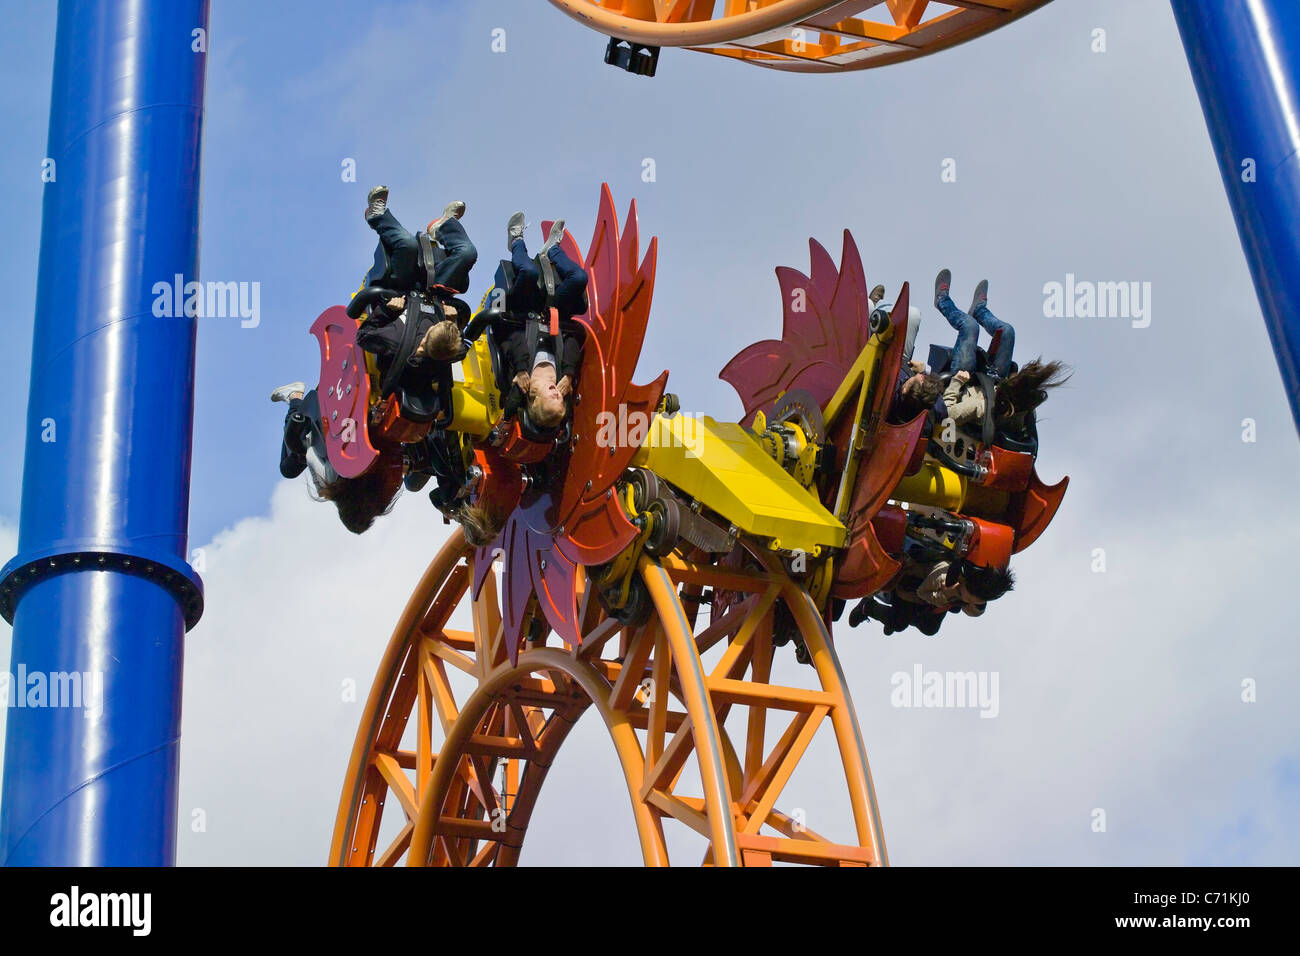 People in an amusement park ride, Linnanmäki Helsinki Finland Stock Photo